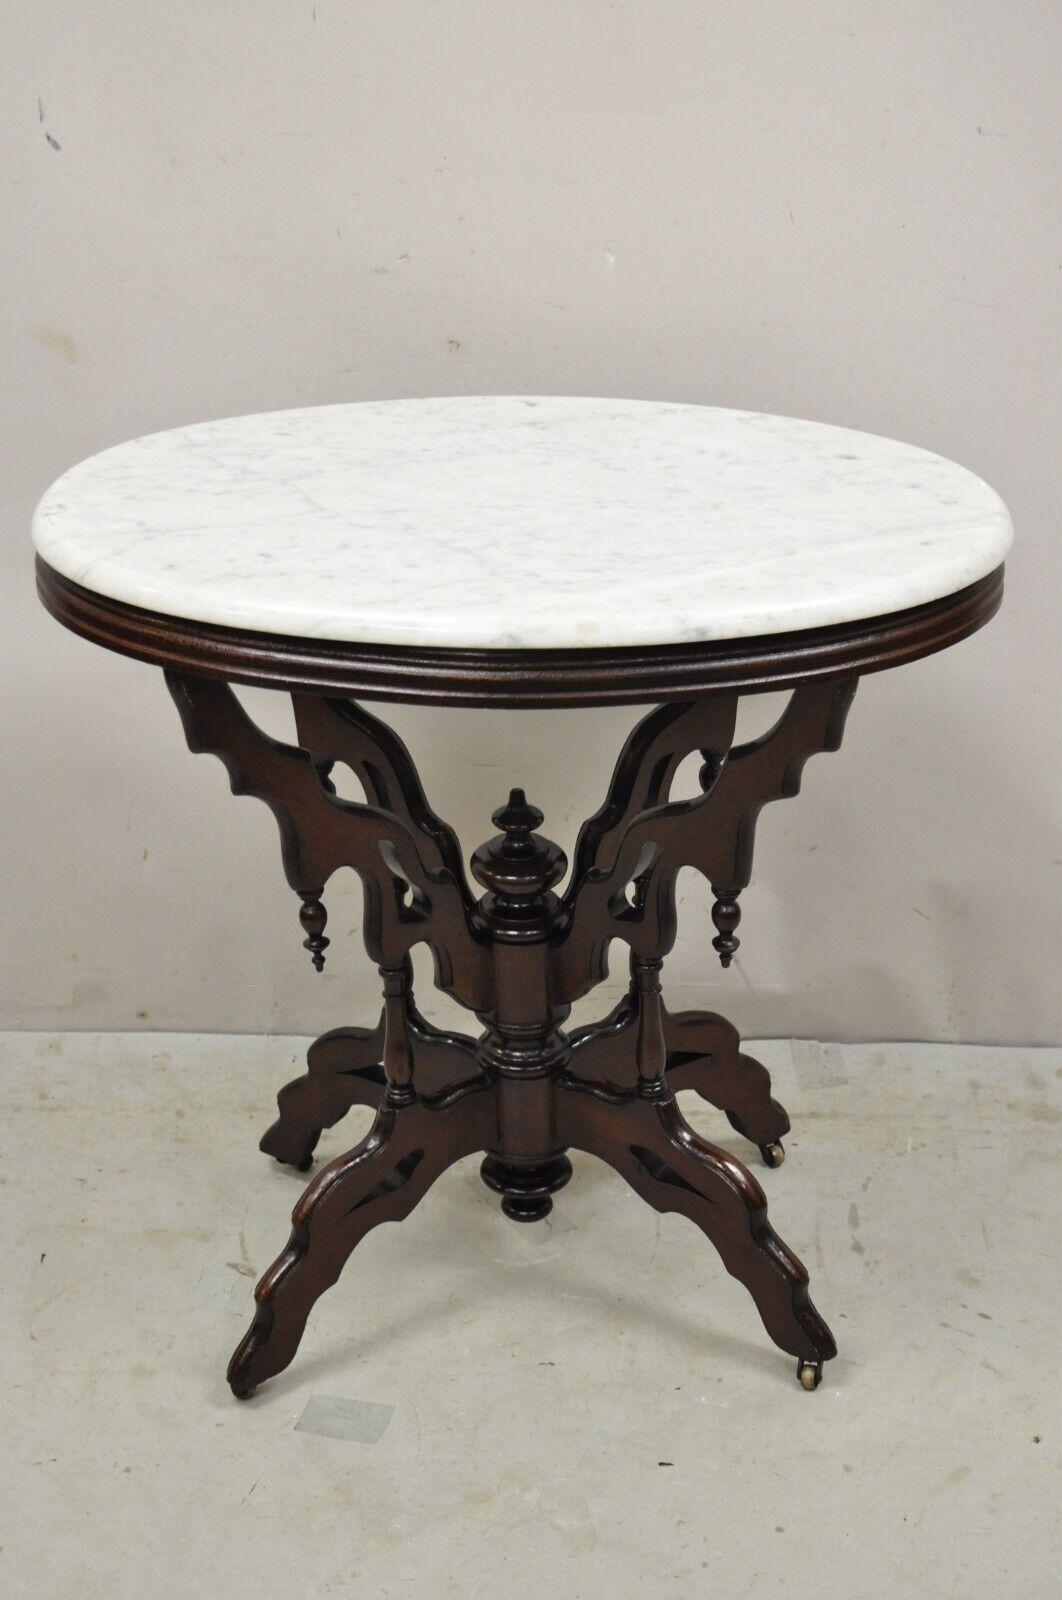 Ancienne table de salon Eastlake Victorian Walnut Oval Marble Top Parlor Lamp Table. Circa 19ème siècle. Dimensions : 28,5